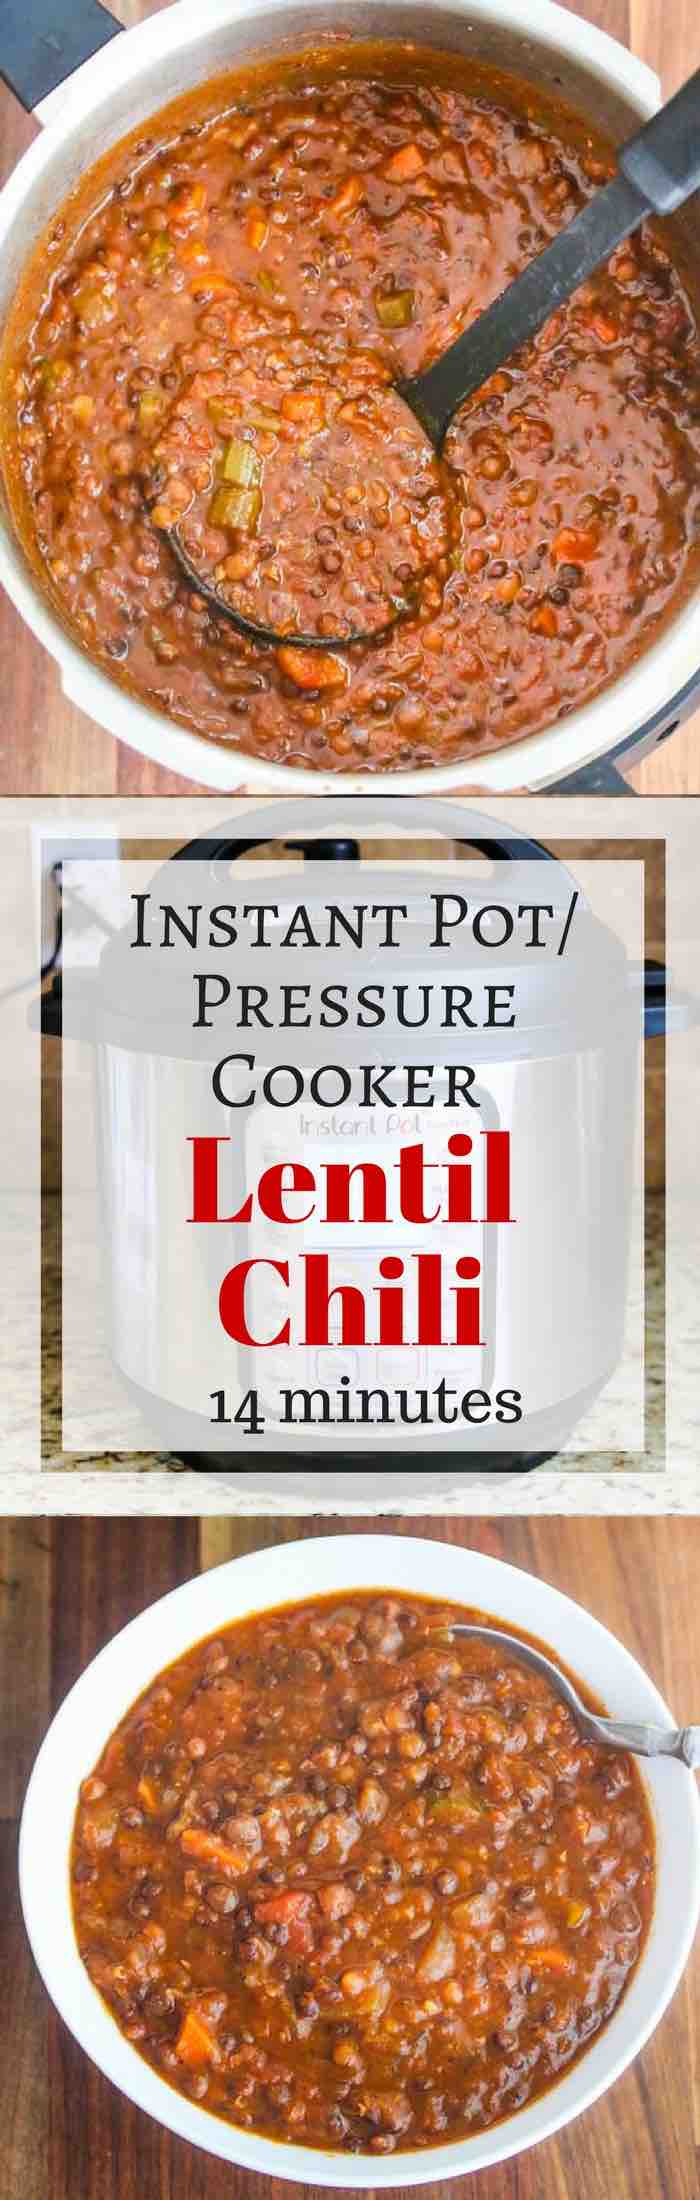 Pressure Cooker/Instant Pot Lentil Chili - vegan/vegetarian, quick, healthy, delicious meal